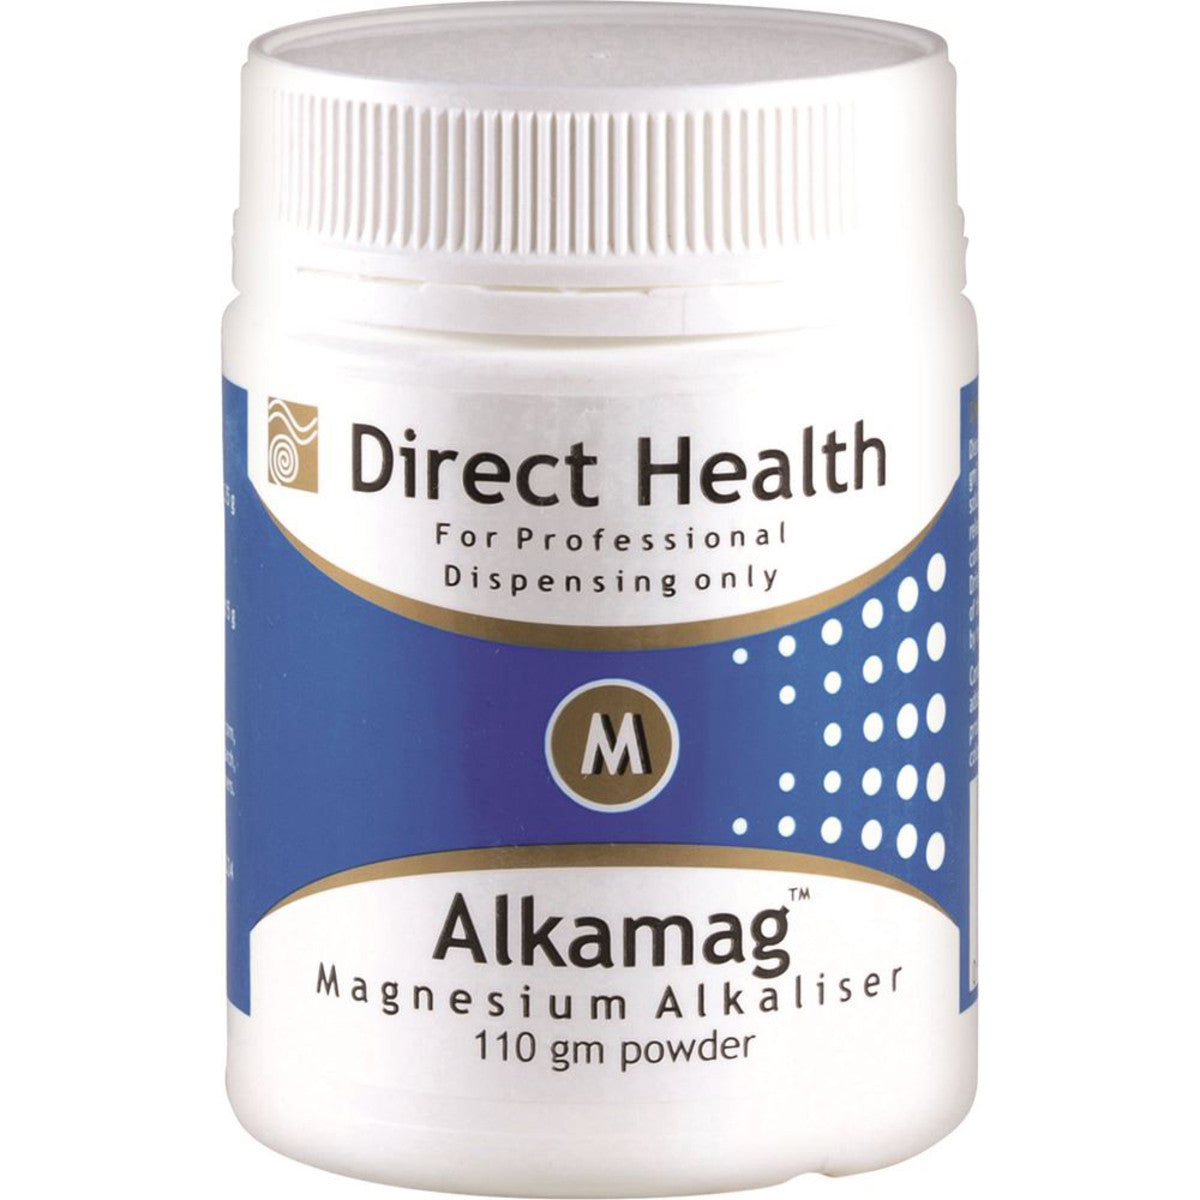 Direct Health - Alkamag